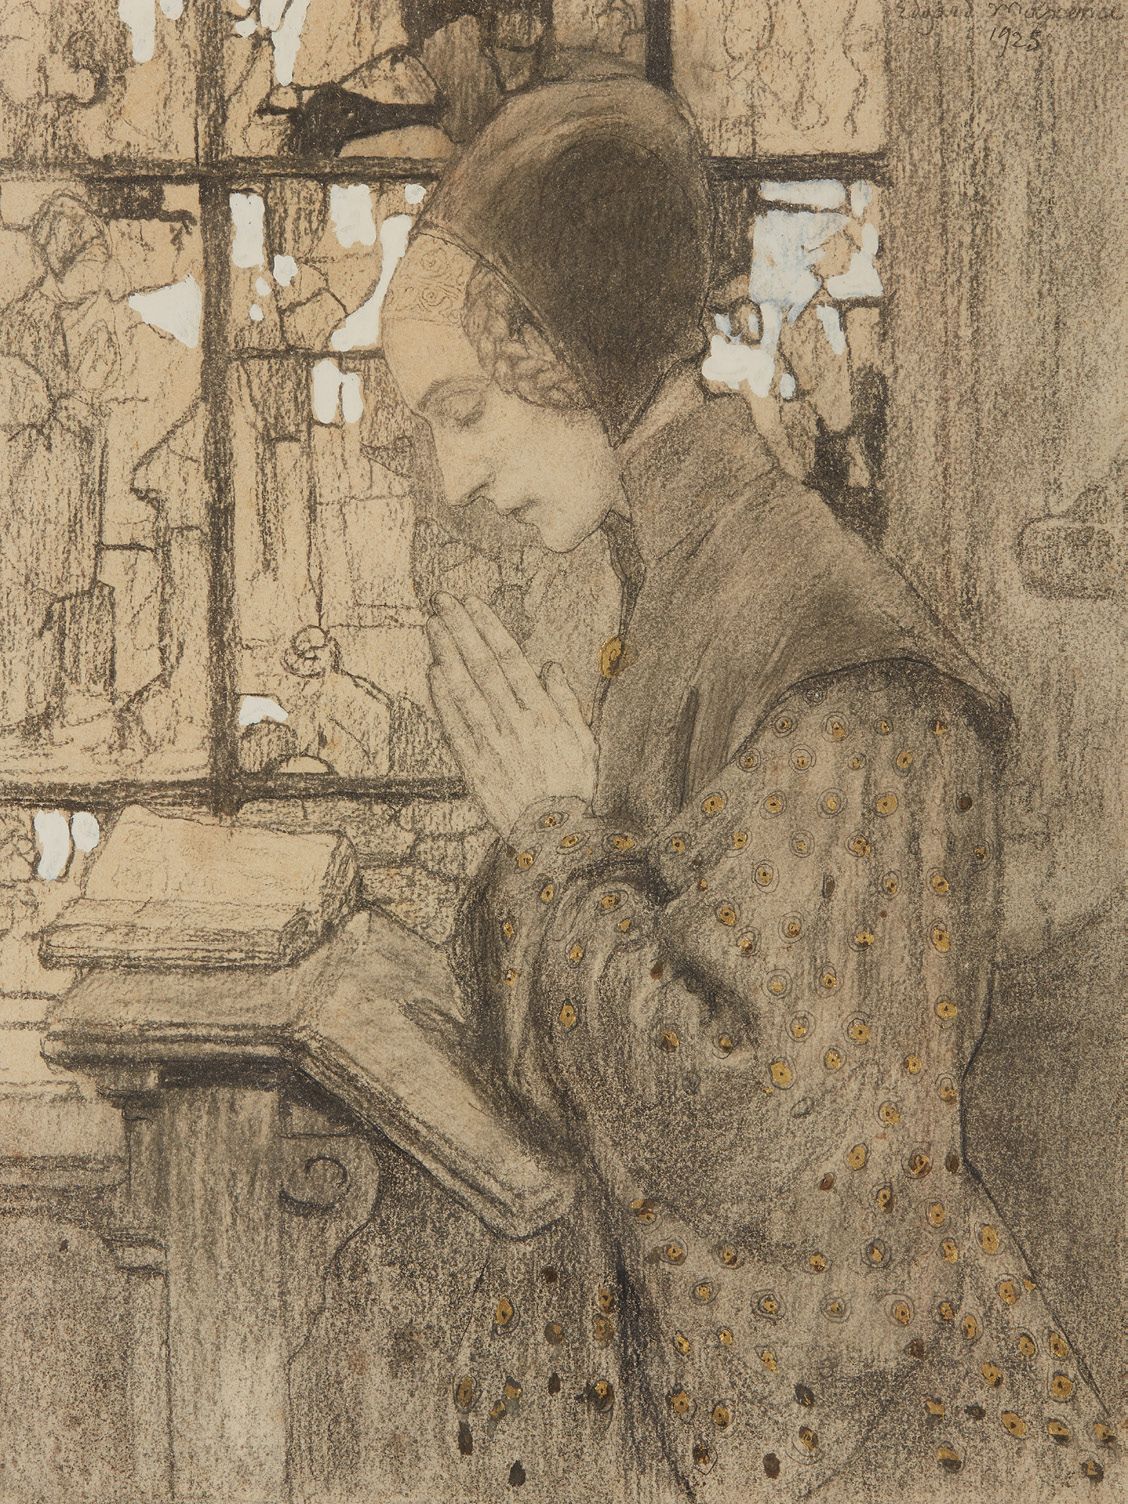 Edgard MAXENCE (1871-1954) Femme à la coiffe tenant un oiseau, 1925
Crayon, reha&hellip;